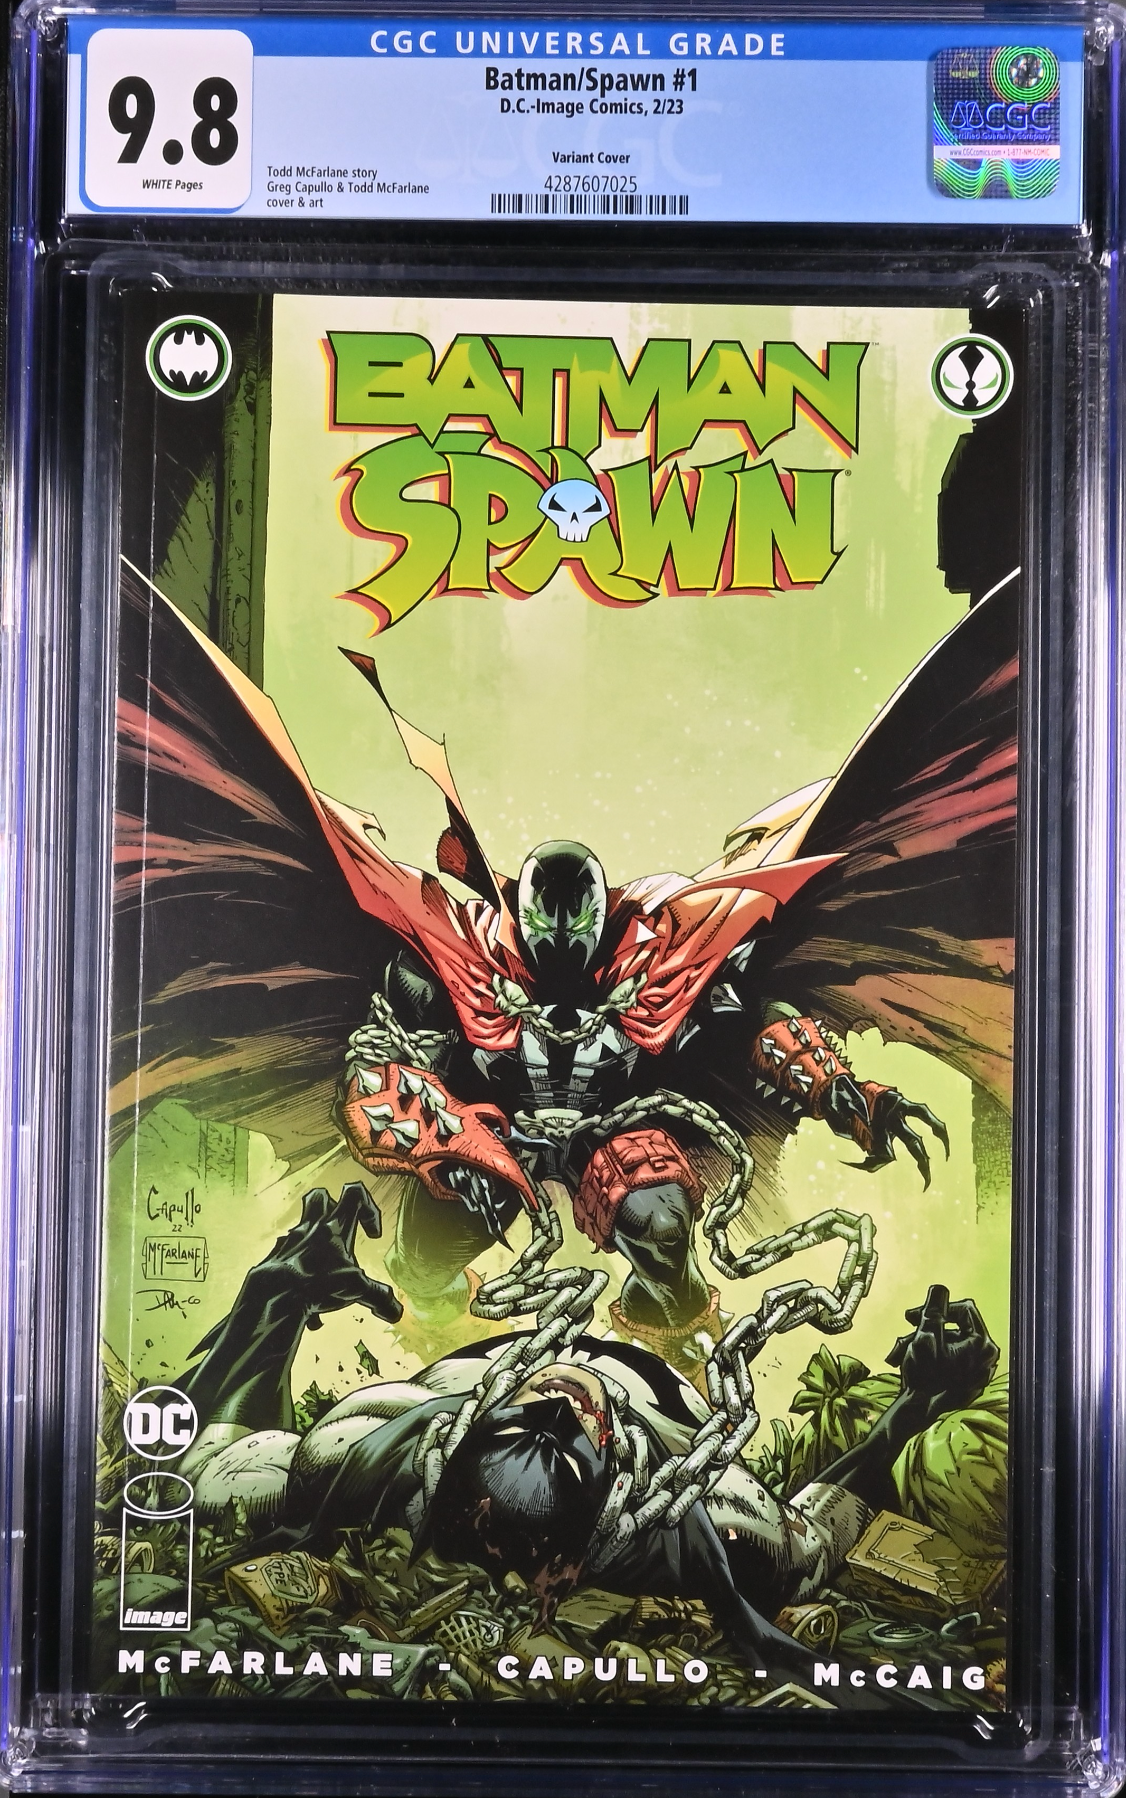 Batman Spawn #1 Cover B- Capullo & McFarlane "Spawn" CGC 9.8